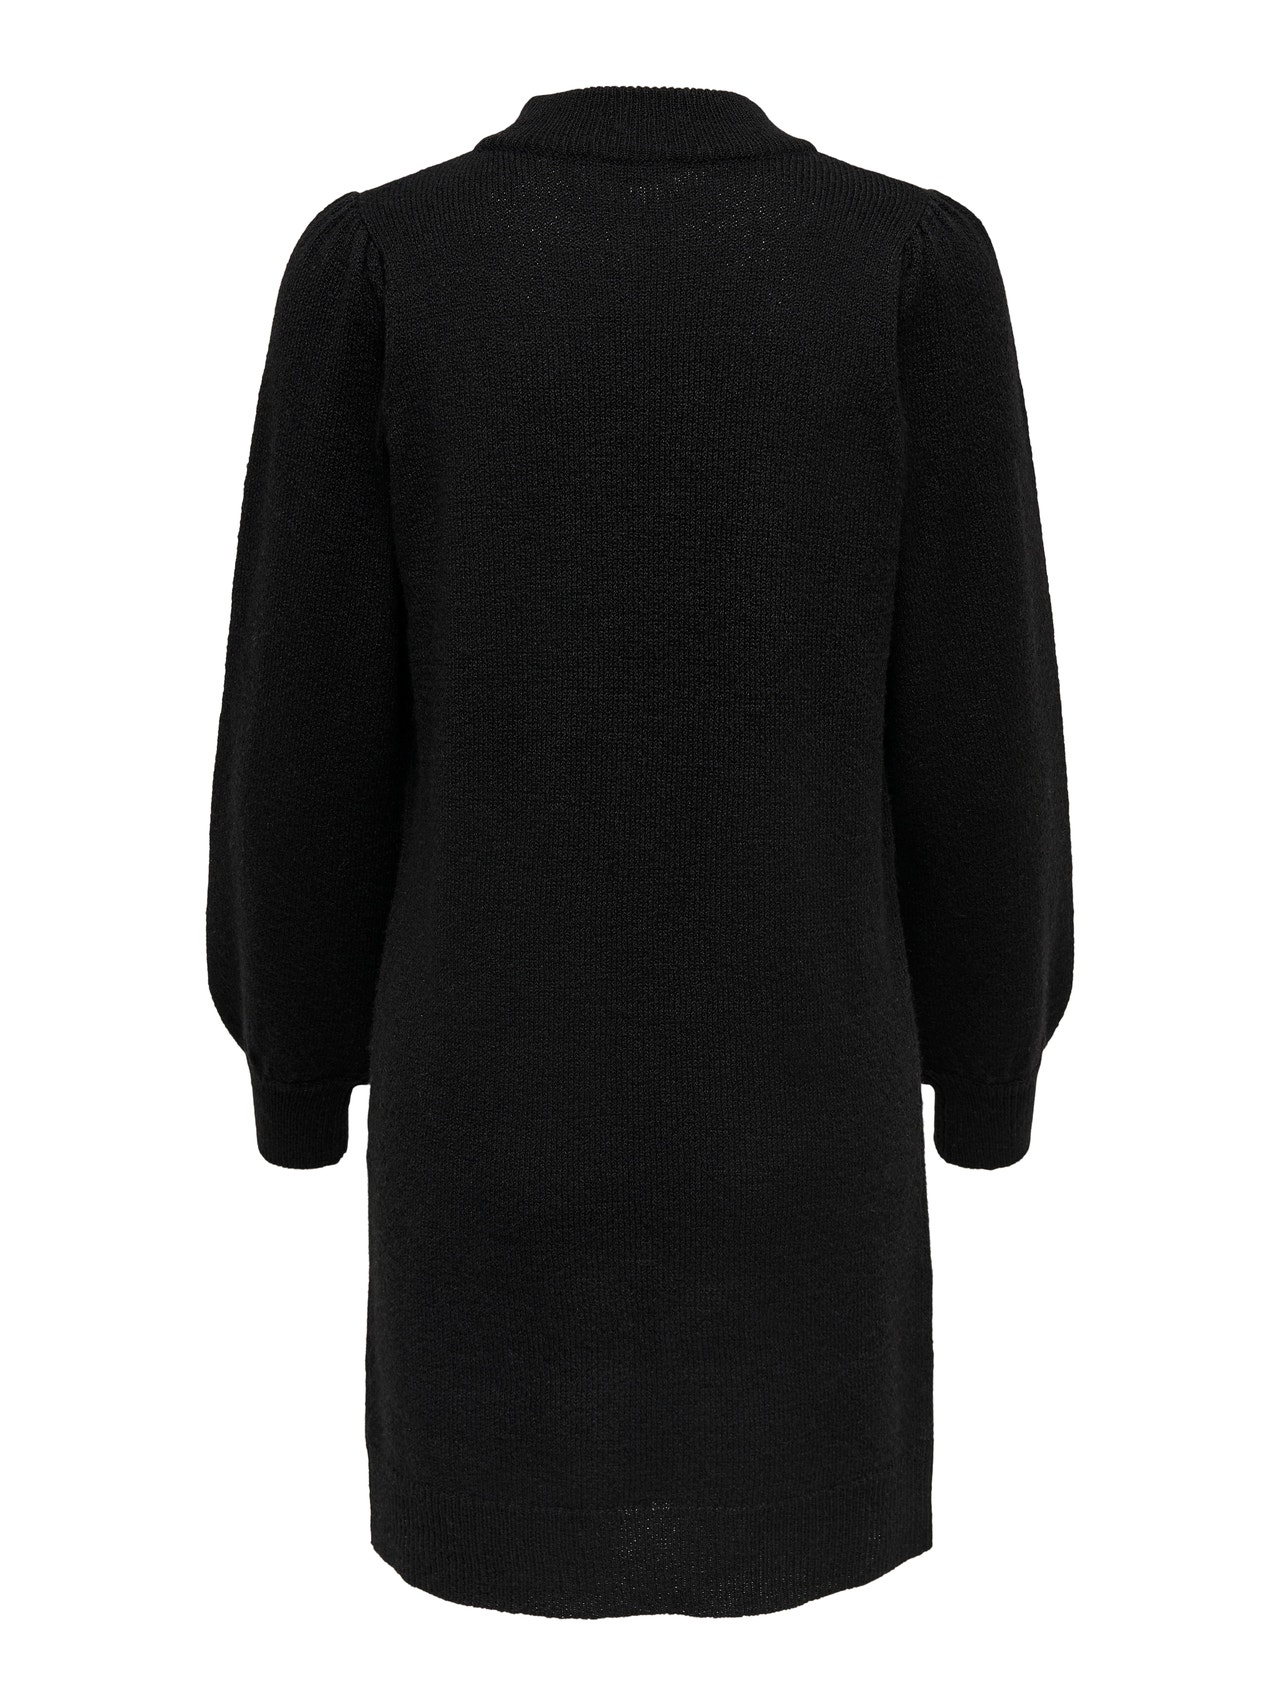 ONLY® dress Black | Loose Volume sleeves Fit | High Short neck